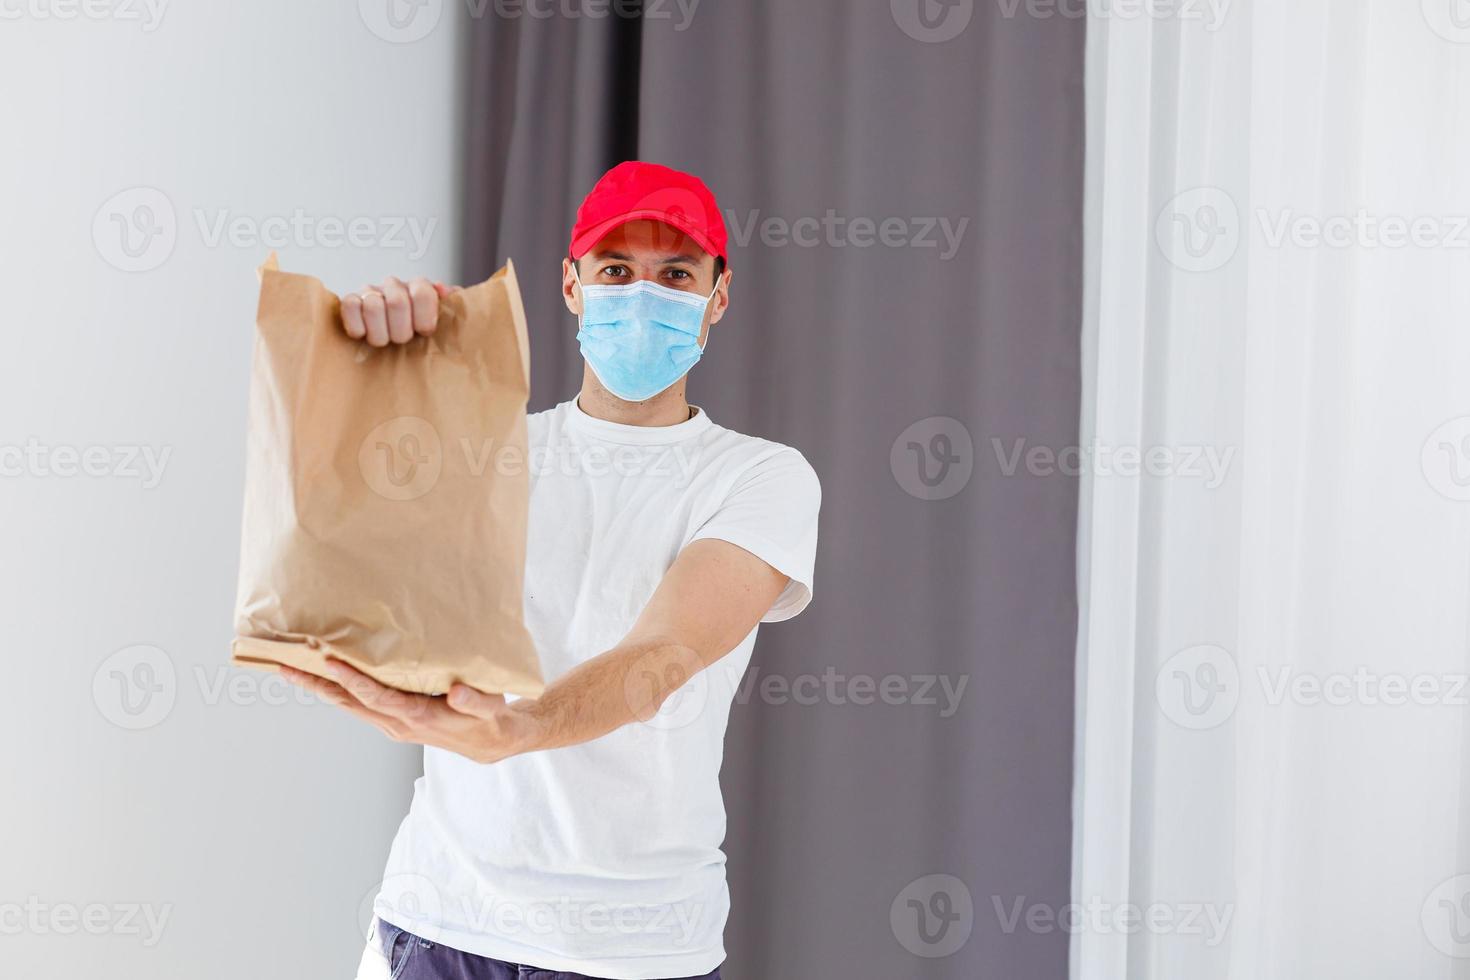 levering Mens Holding papier zak met voedsel Aan wit achtergrond, voedsel levering Mens in beschermend masker foto